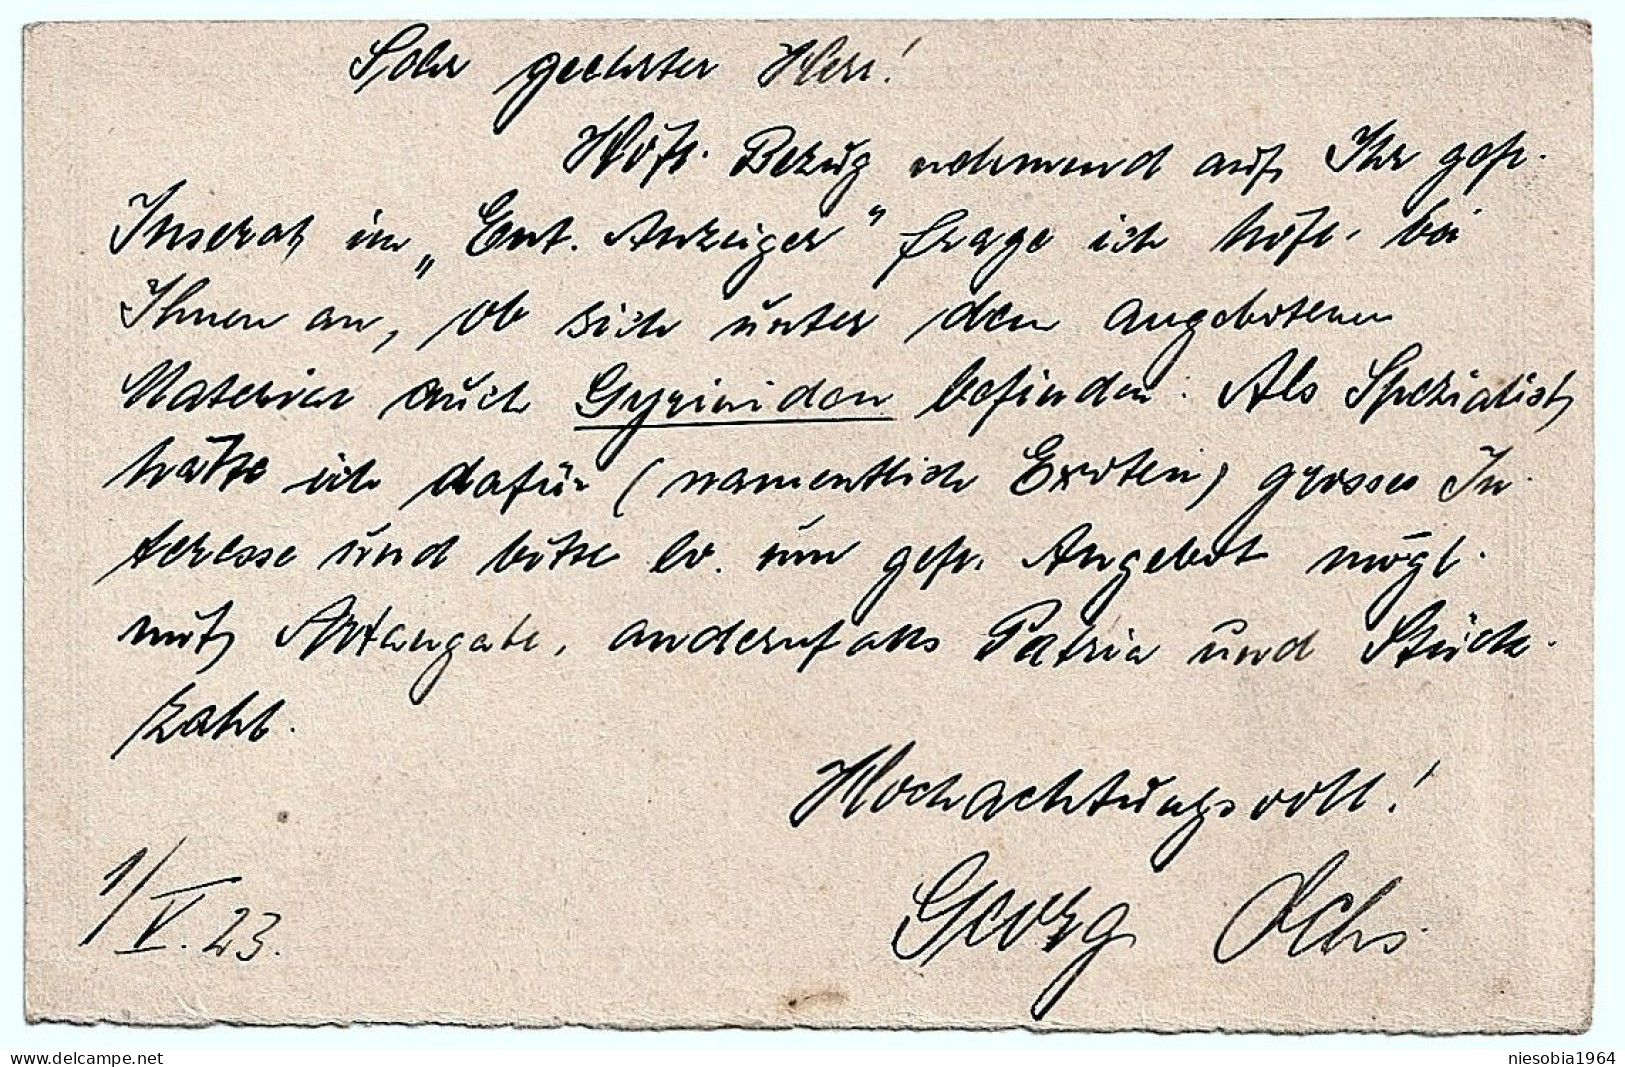 Correspondence Card Georg Ochs - Frankfurt (Main) To Leo Kaffenda Vienna 30 IV 1923 German Reich Mark 40 Marks - Cartes Postales